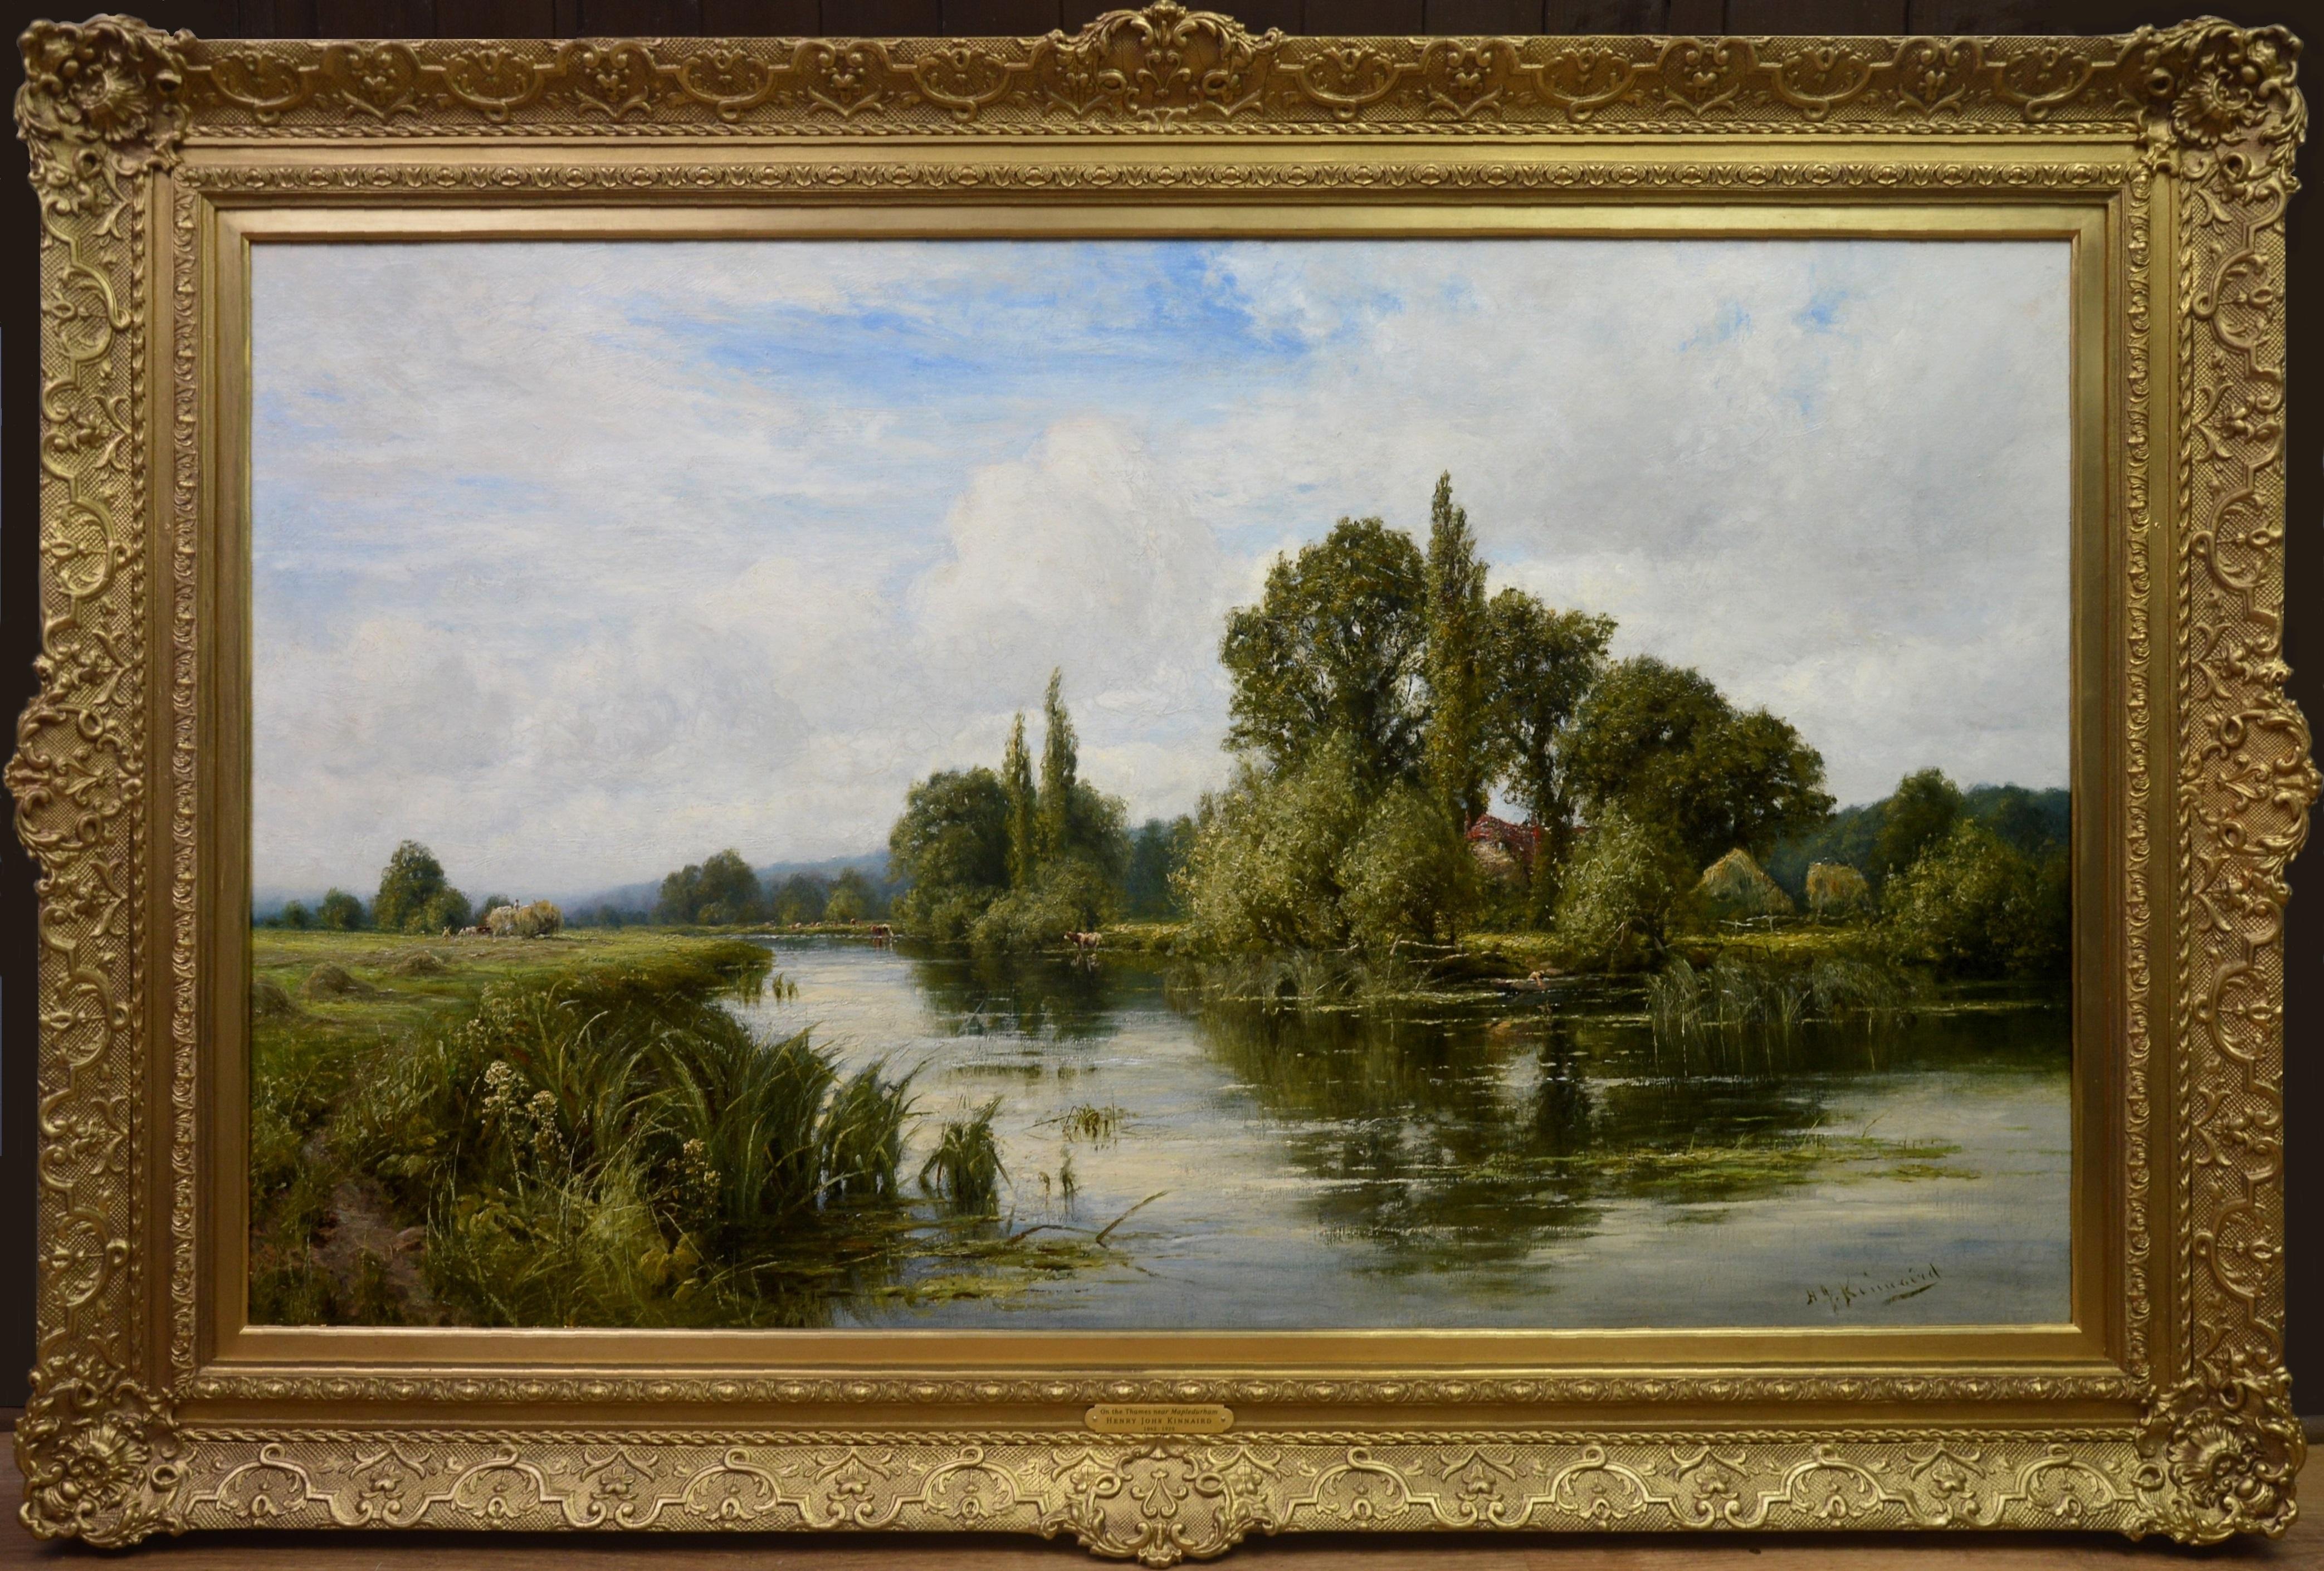 Henry John Kinnaird Figurative Painting - On the Thames near Mapledurham - 19th Century English Landscape Oil Painting